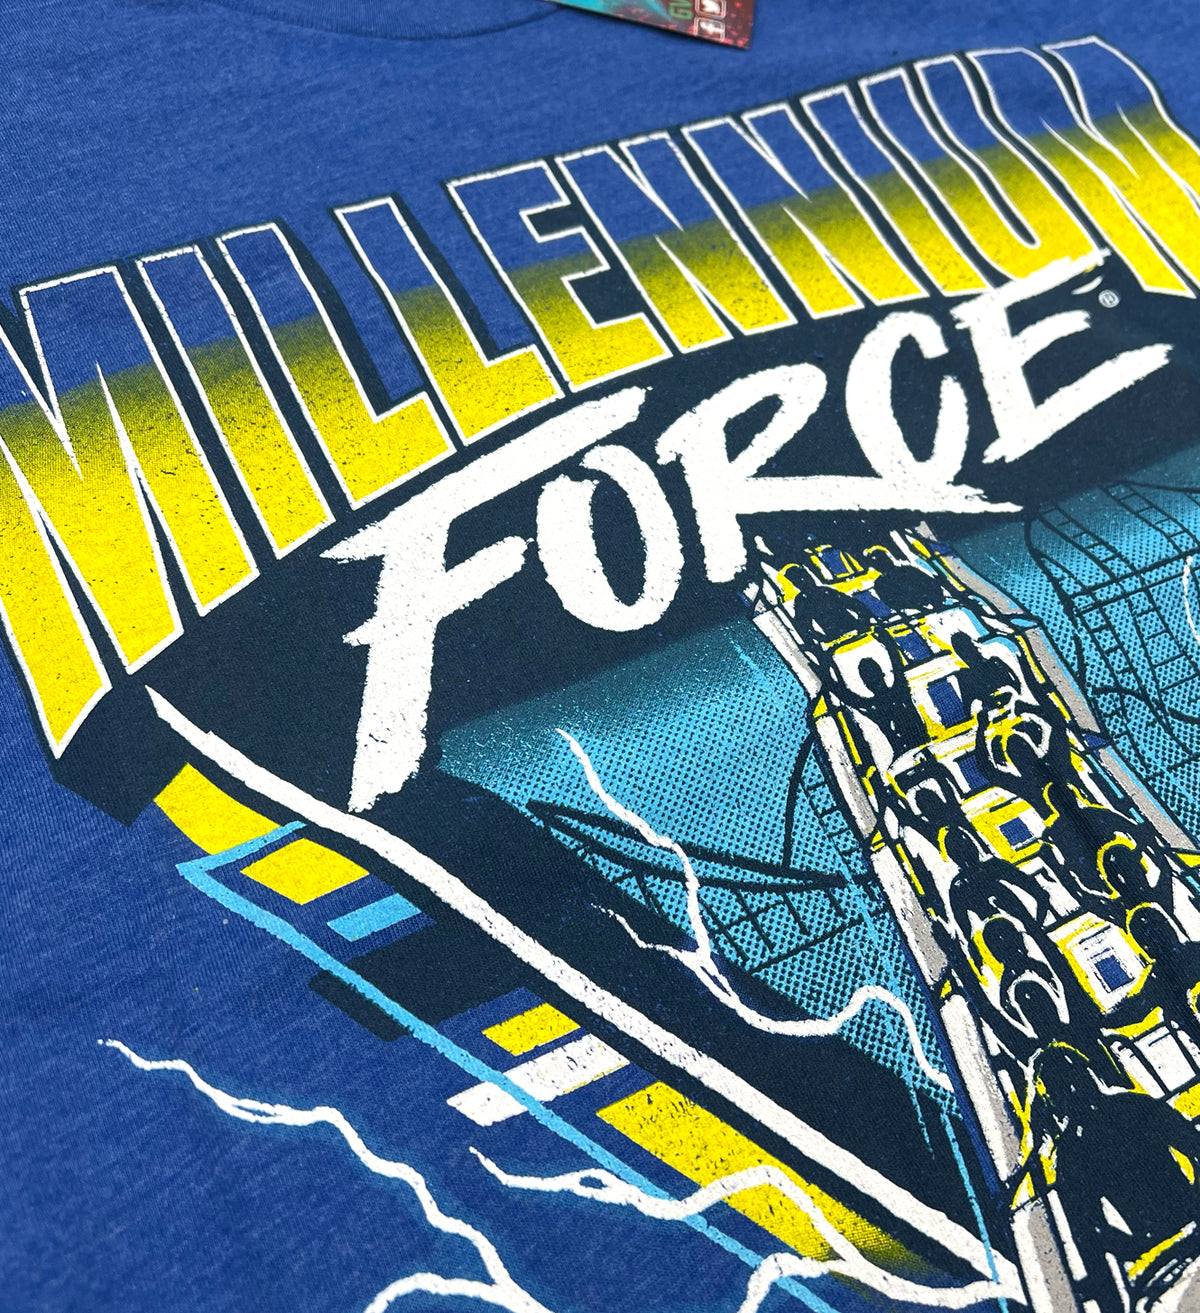 Millennium Force Triangle T shirt